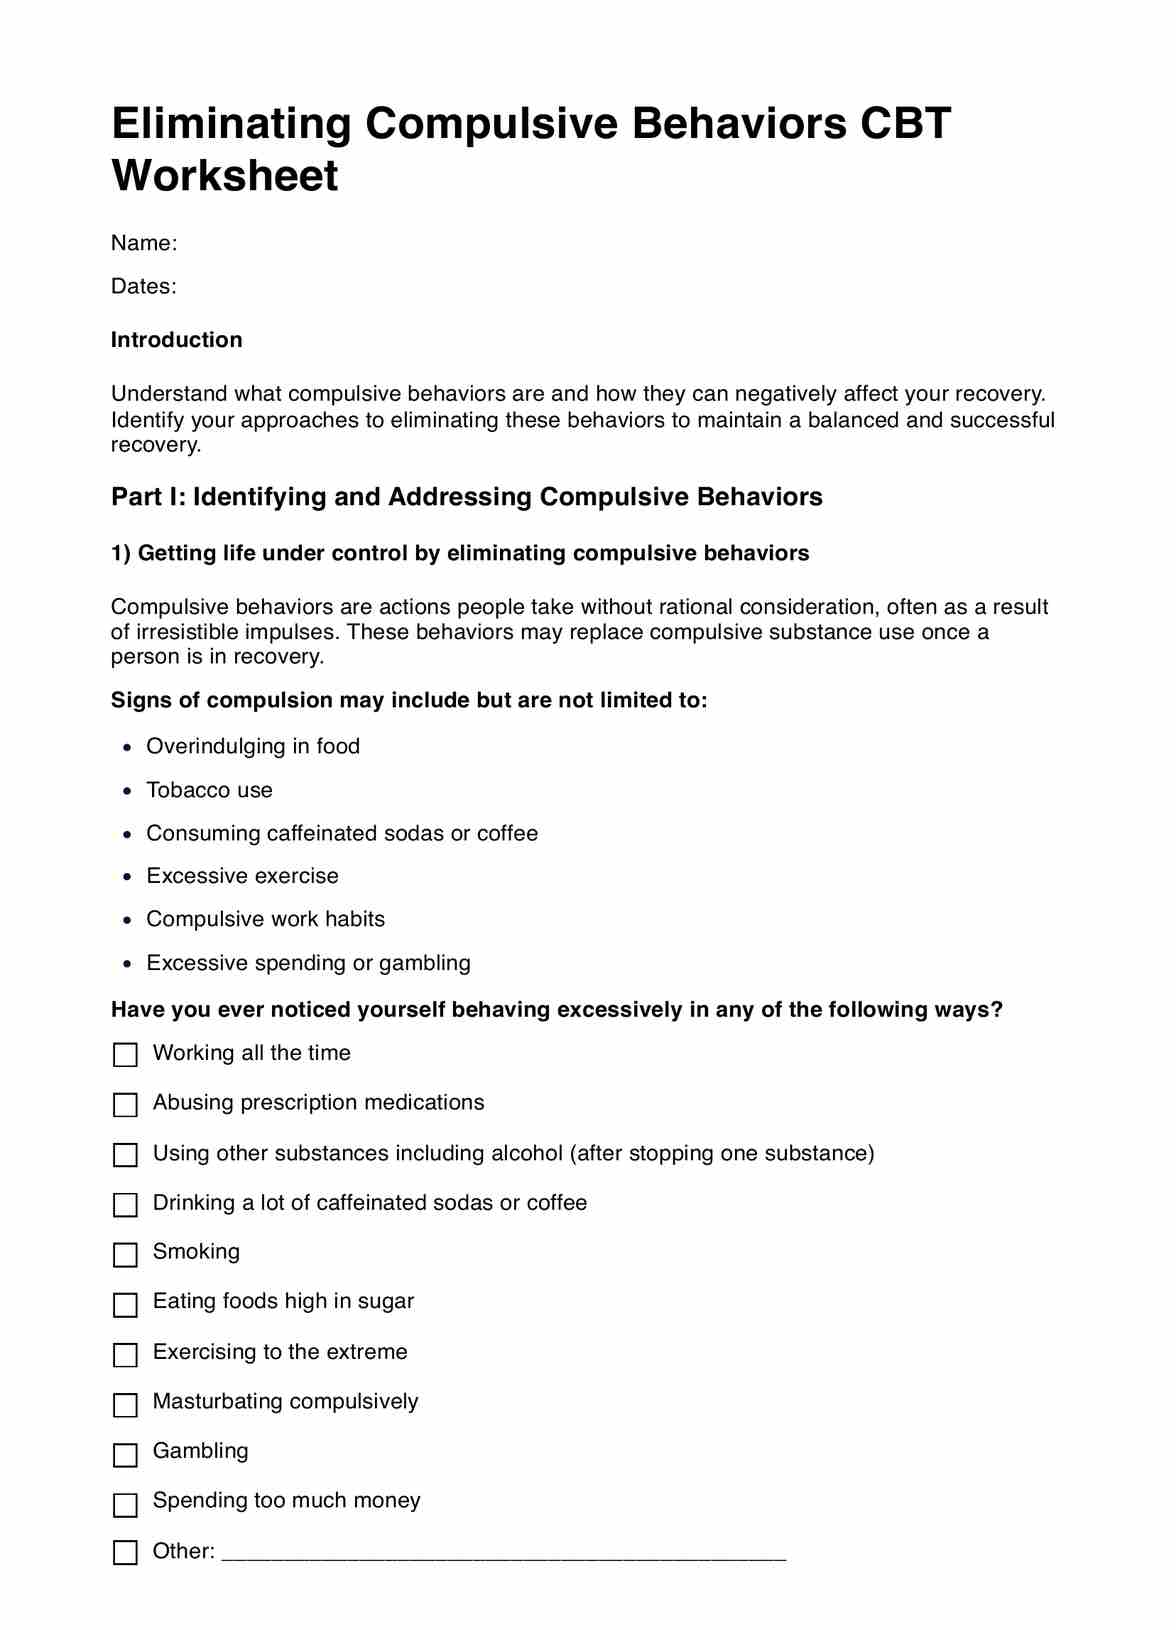 Eliminating Compulsive Behaviors CBT Worksheet PDF Example